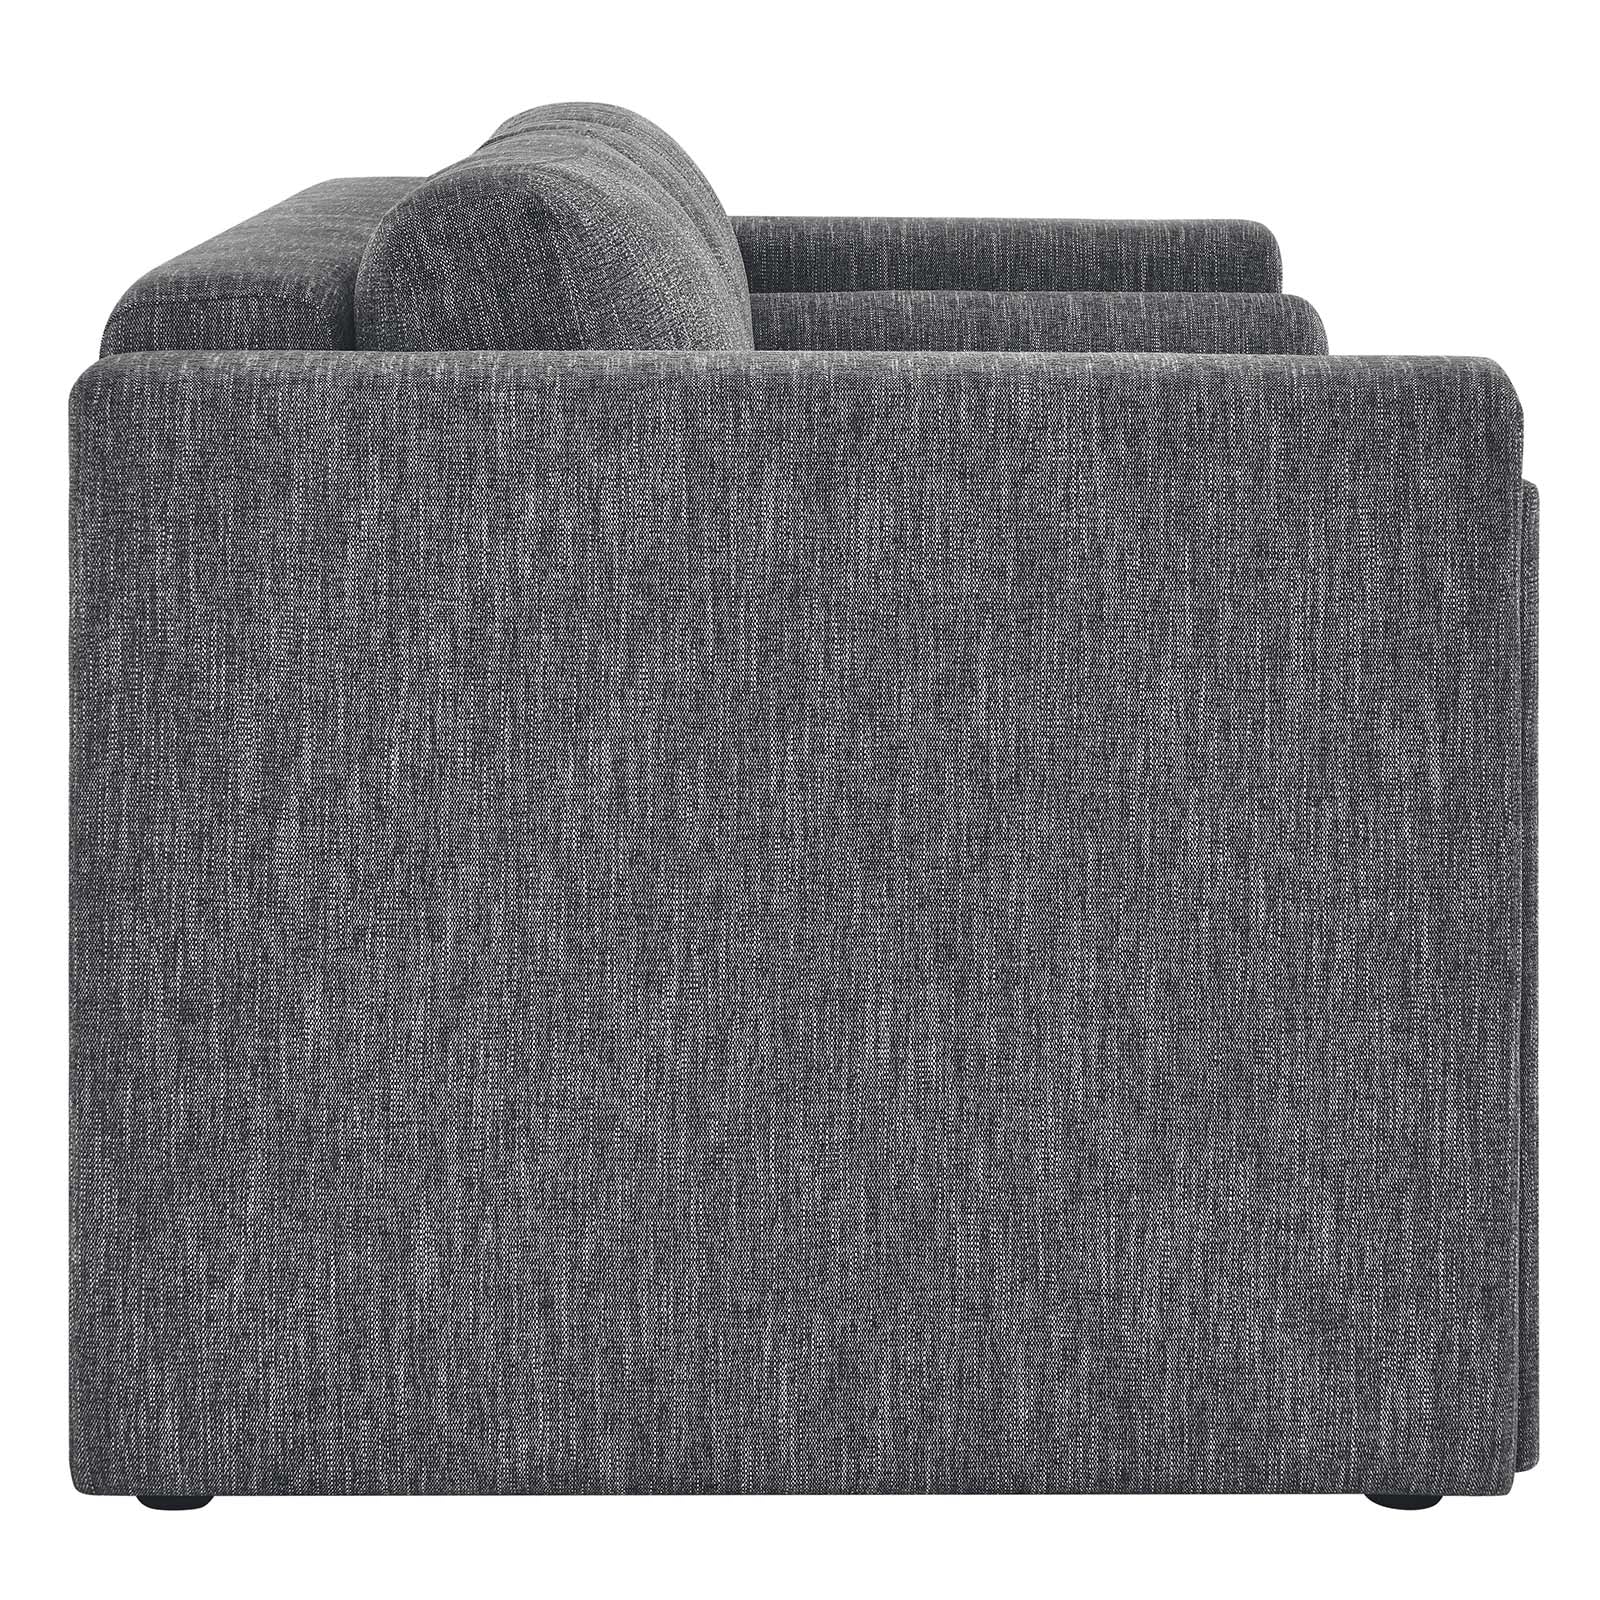 Visible Fabric Sofa - East Shore Modern Home Furnishings